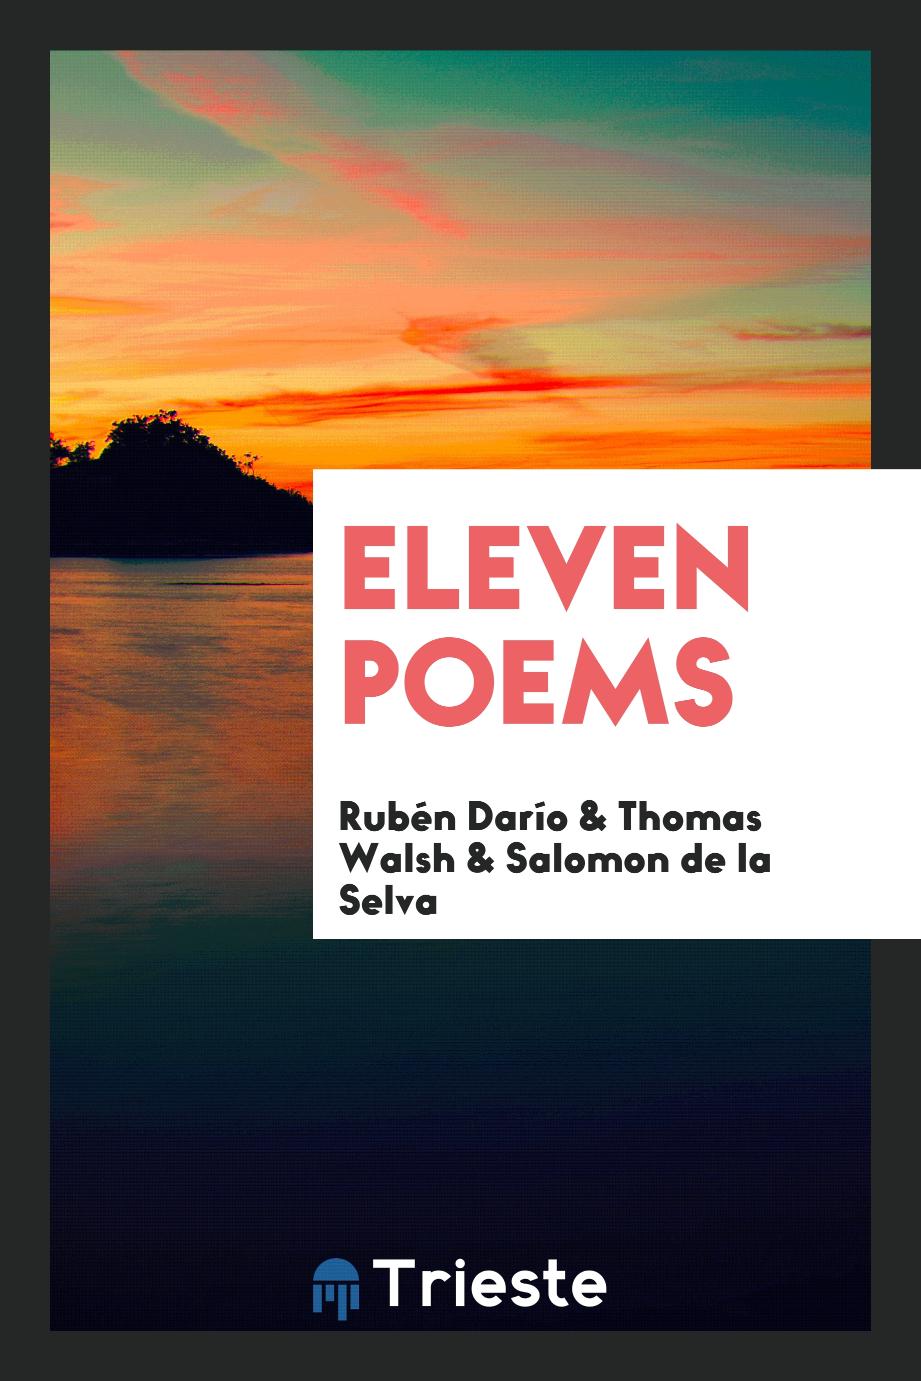 Eleven poems